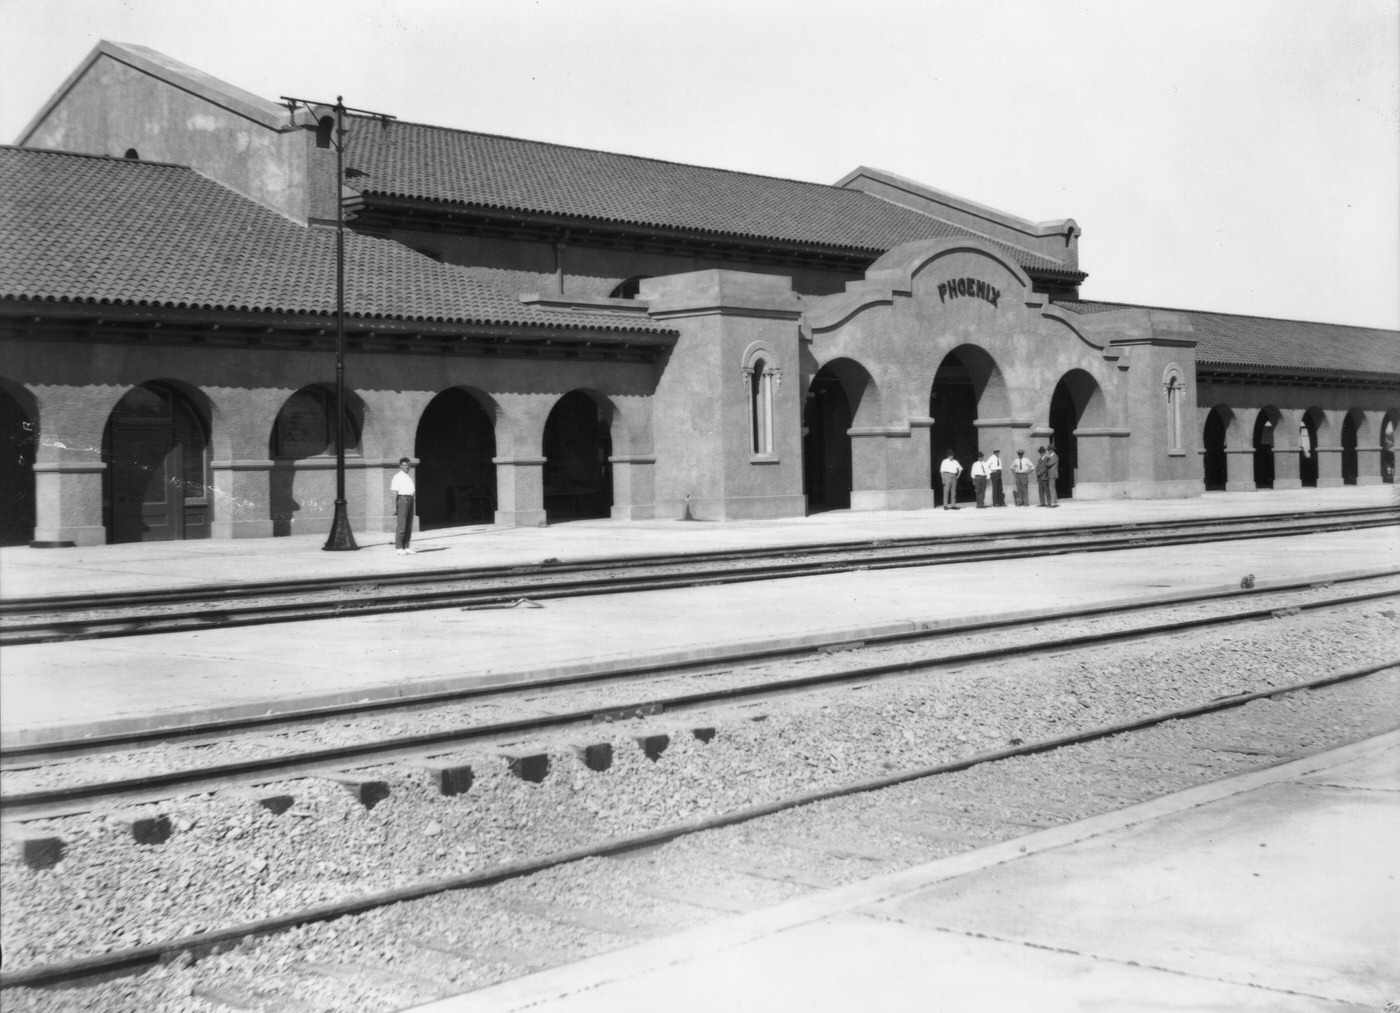 Union Station, 1930s